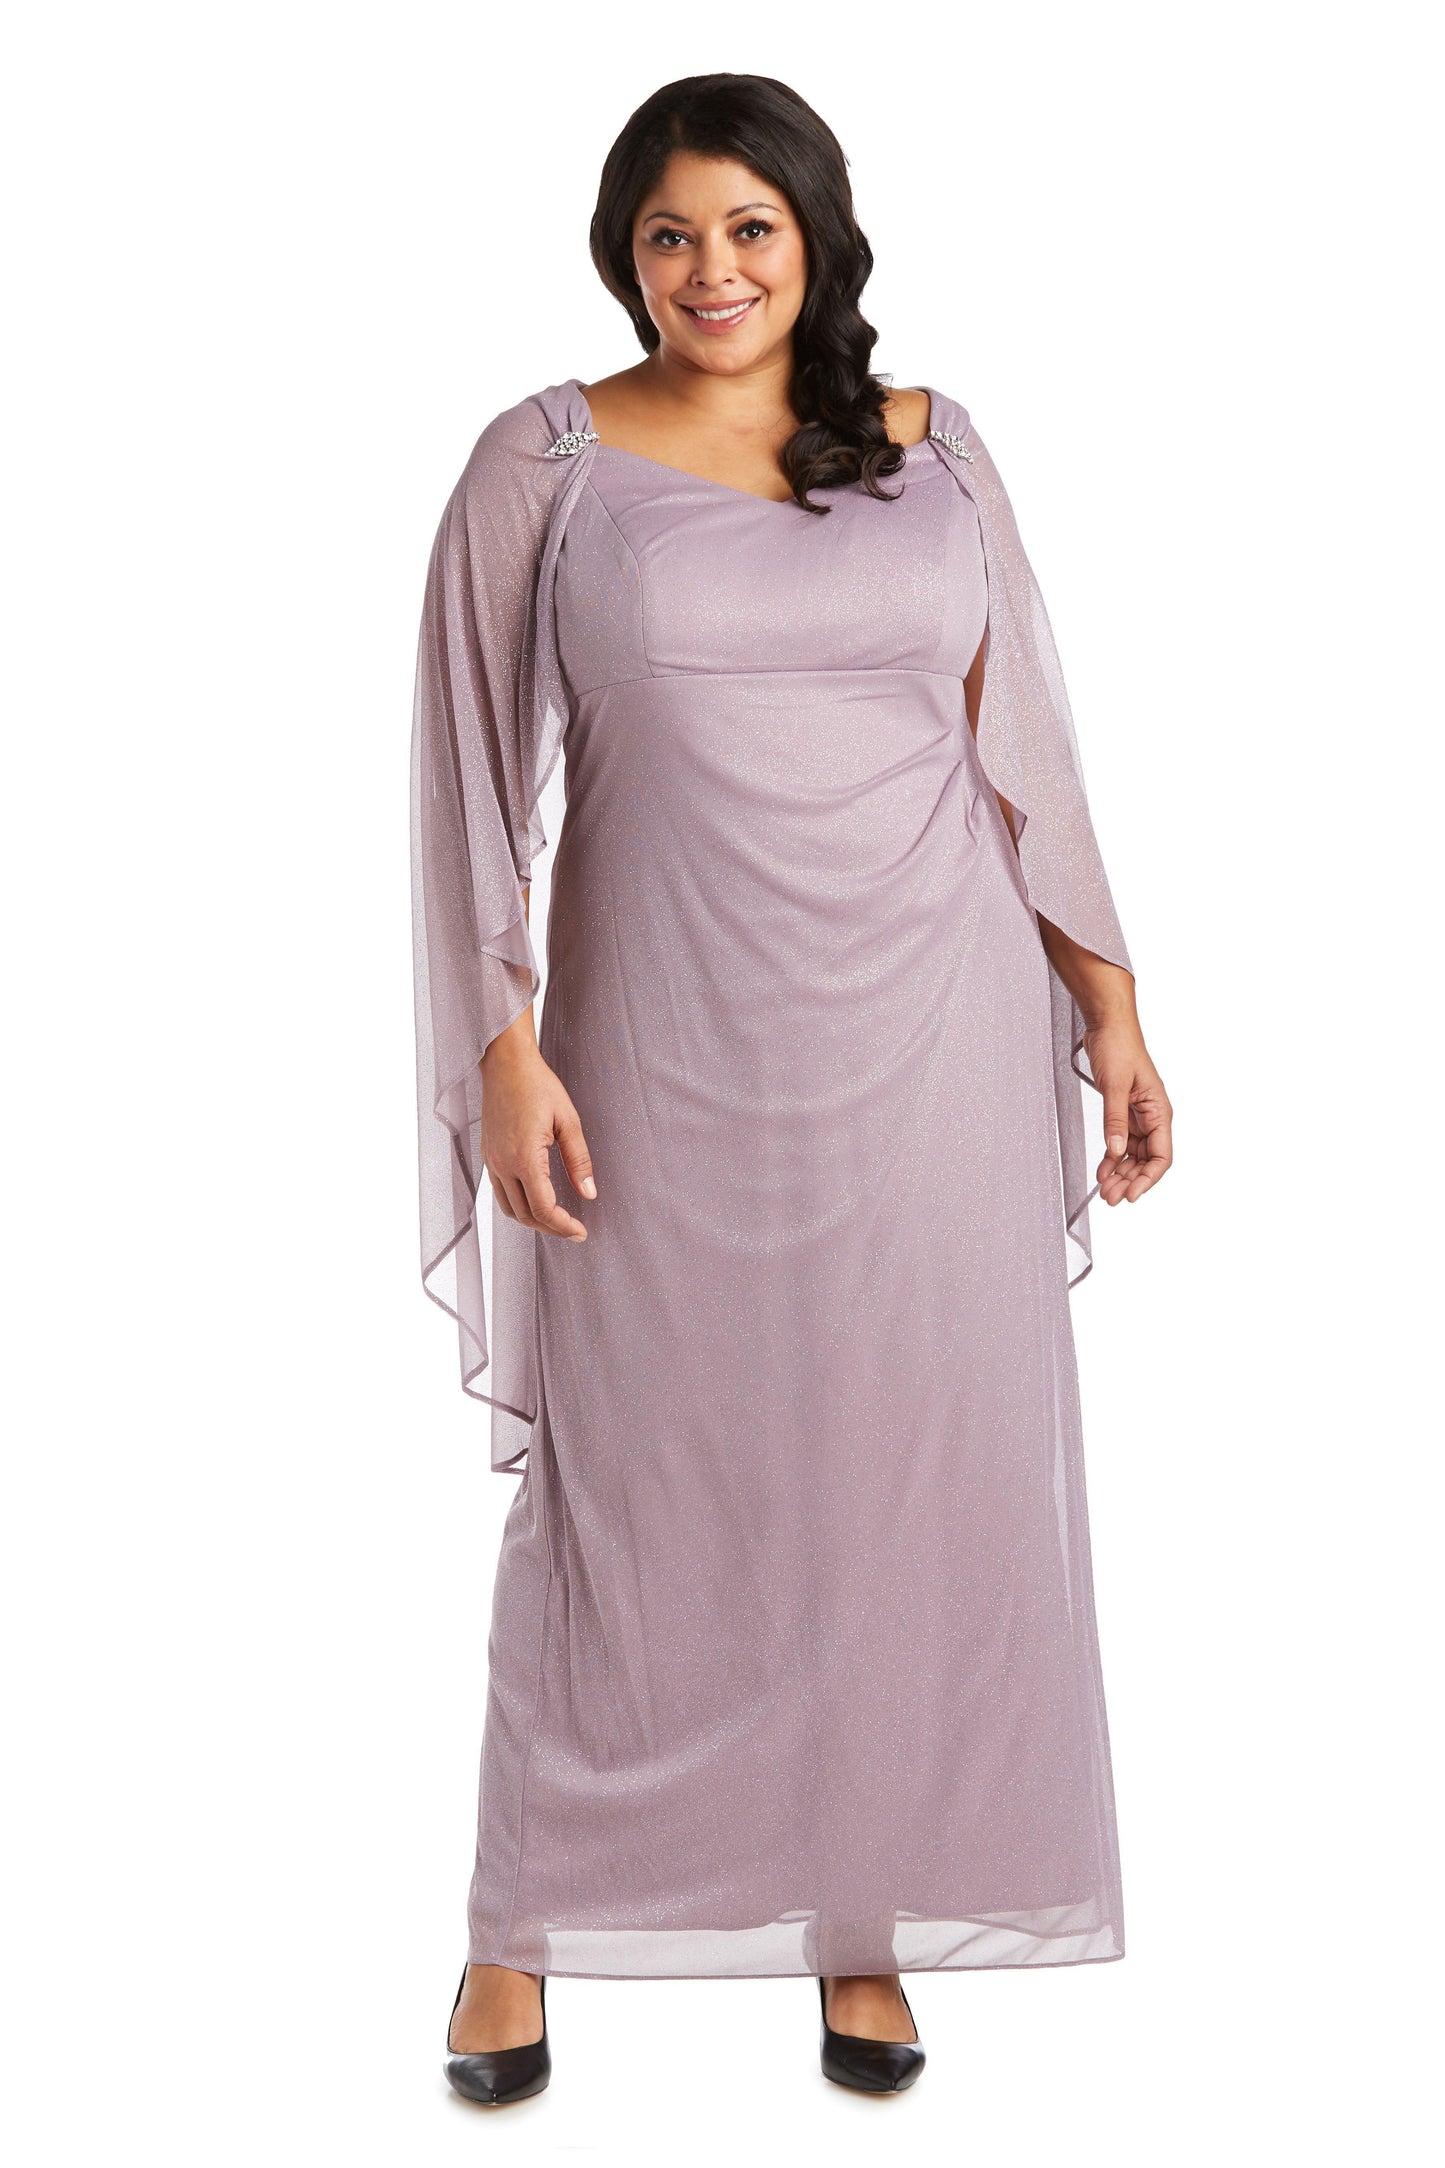 R&M Richards Long Plus Size Formal Cape Gown 2384W - The Dress Outlet